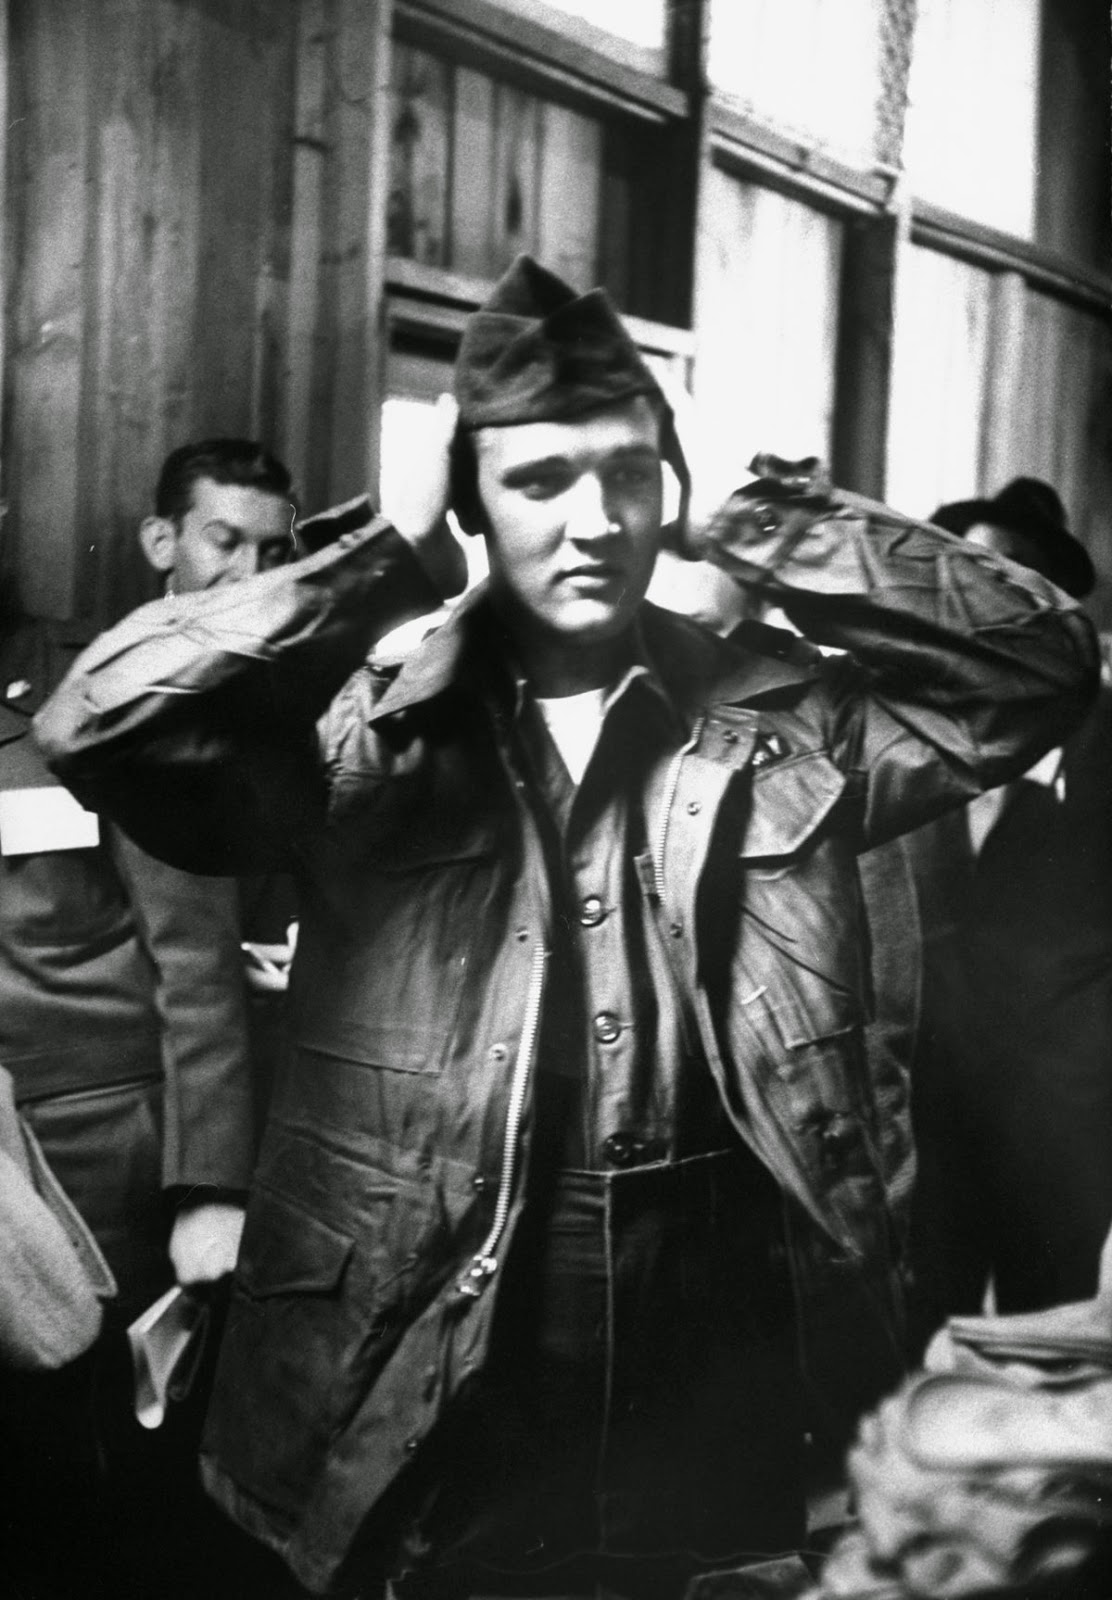 Amazing Historical Photo of Elvis Presley in 1958 